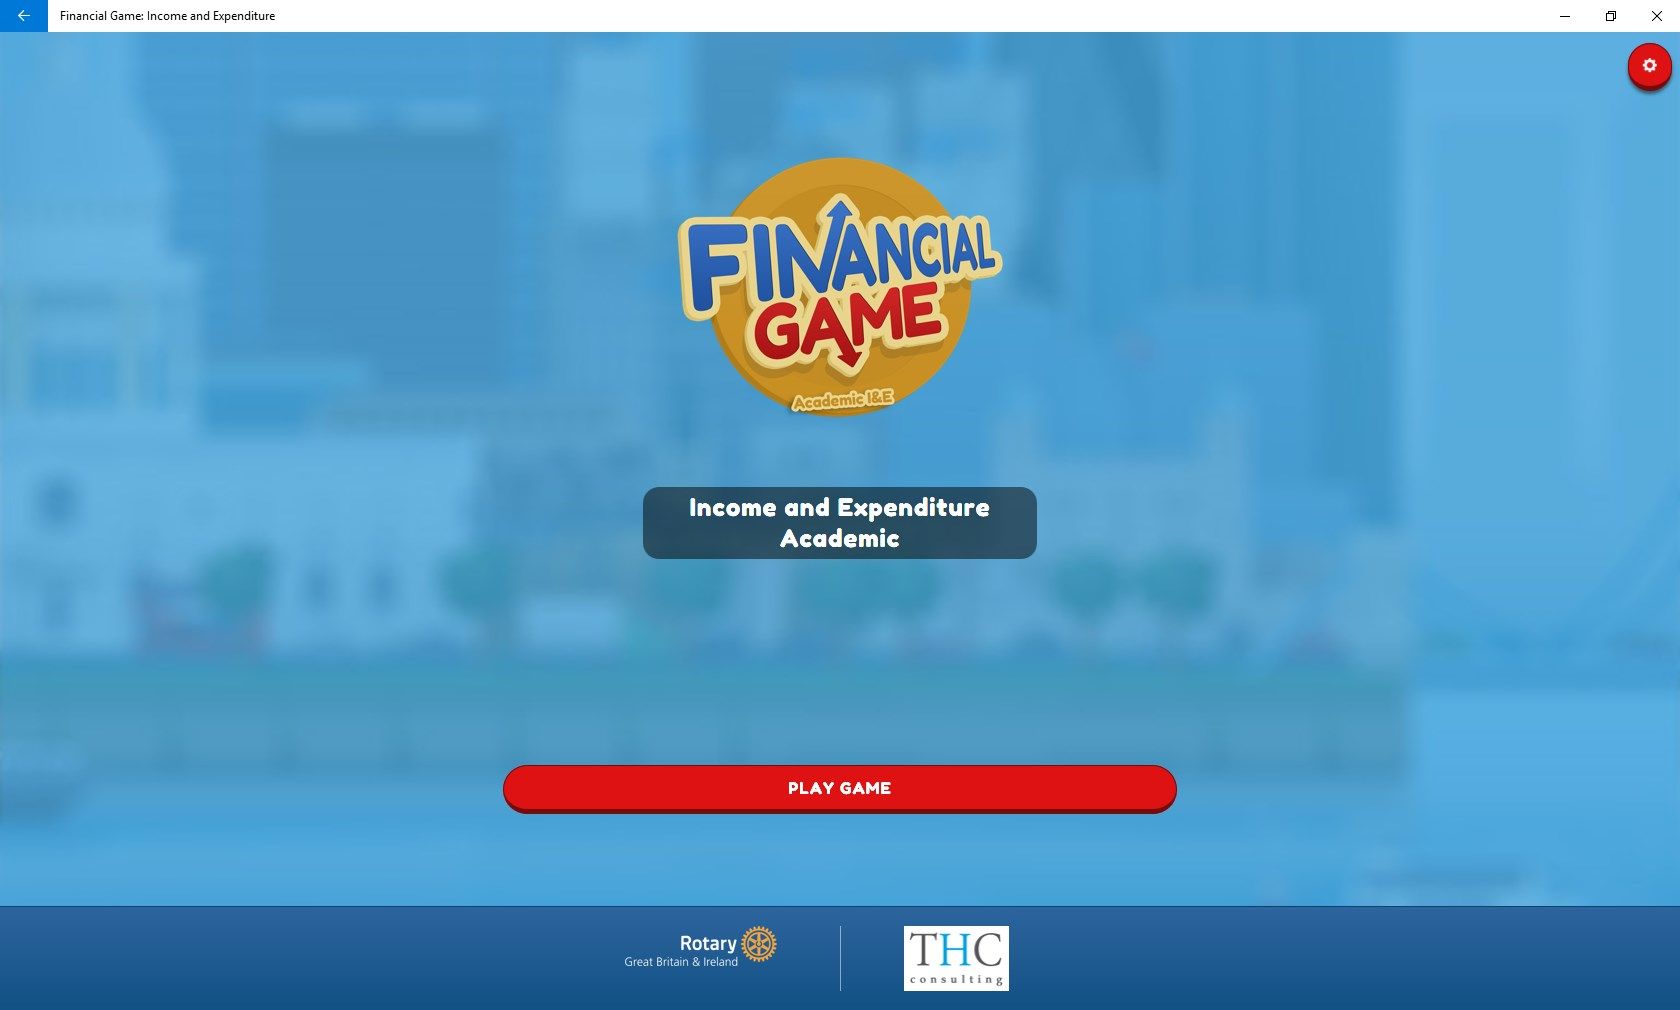 The Financial Game: Academic I&E